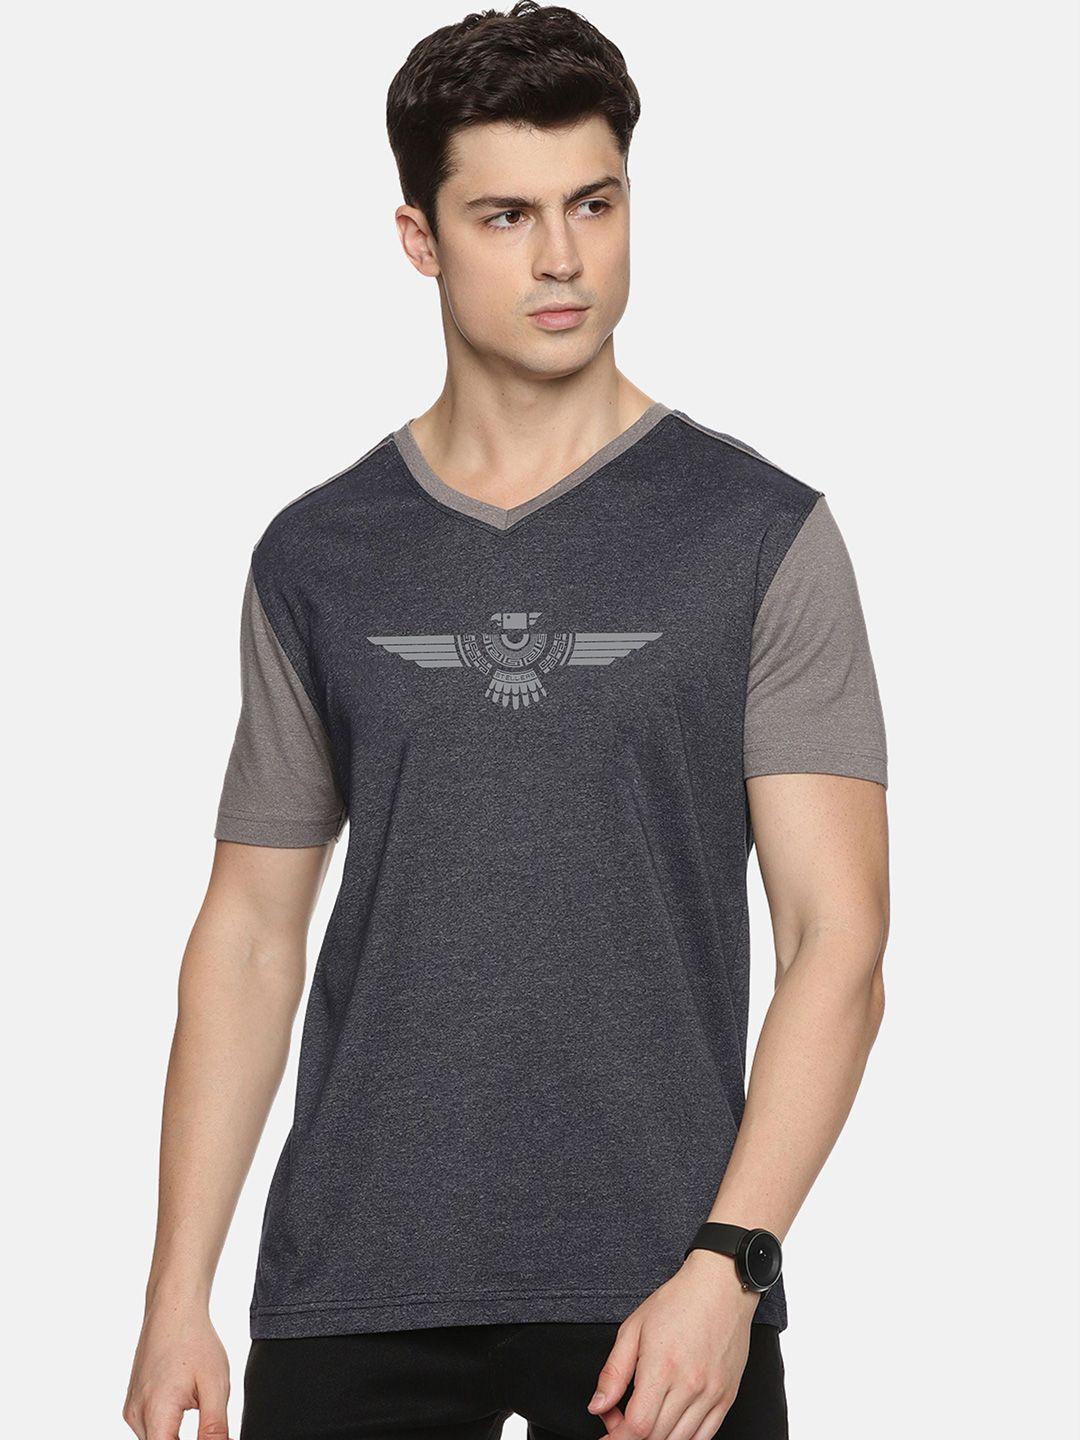 stellers printed v-neck short sleeves t-shirt